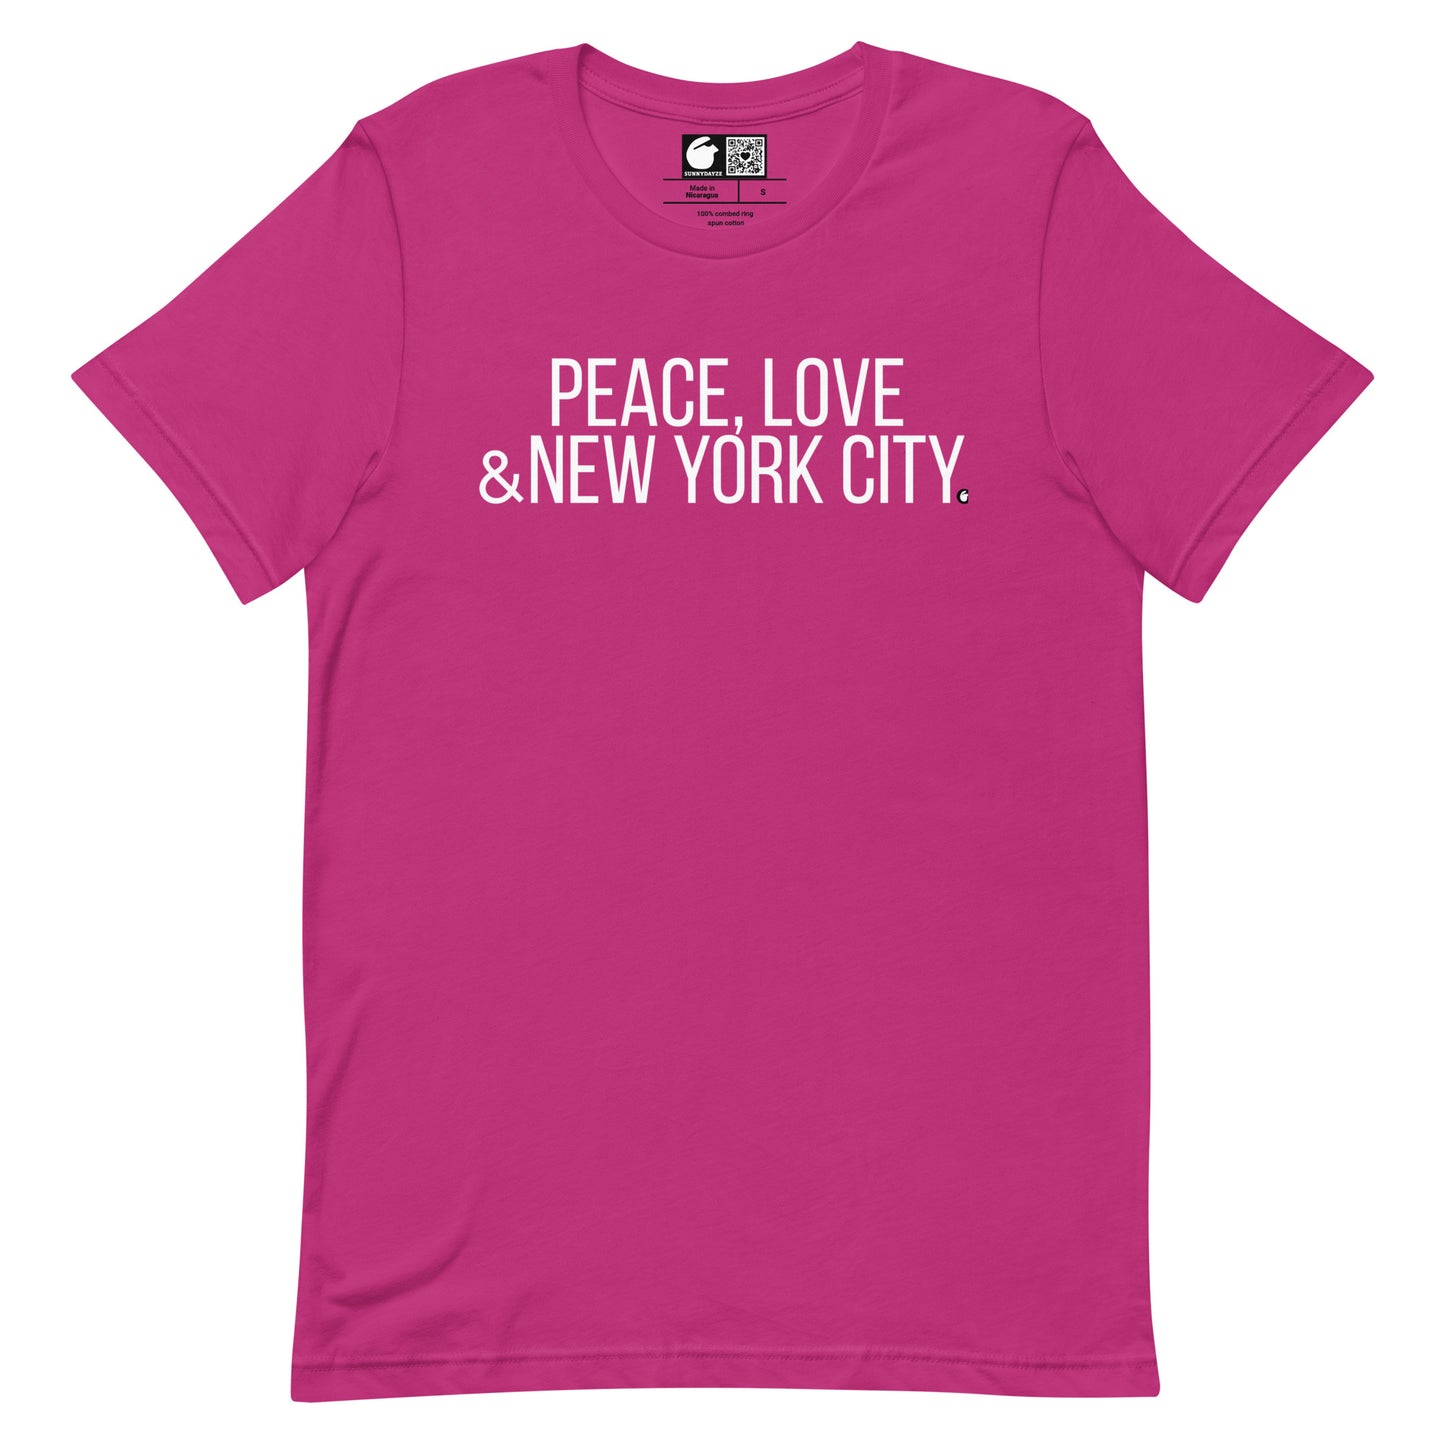 NEW YORK CITY Short-Sleeve unisex t-shirt